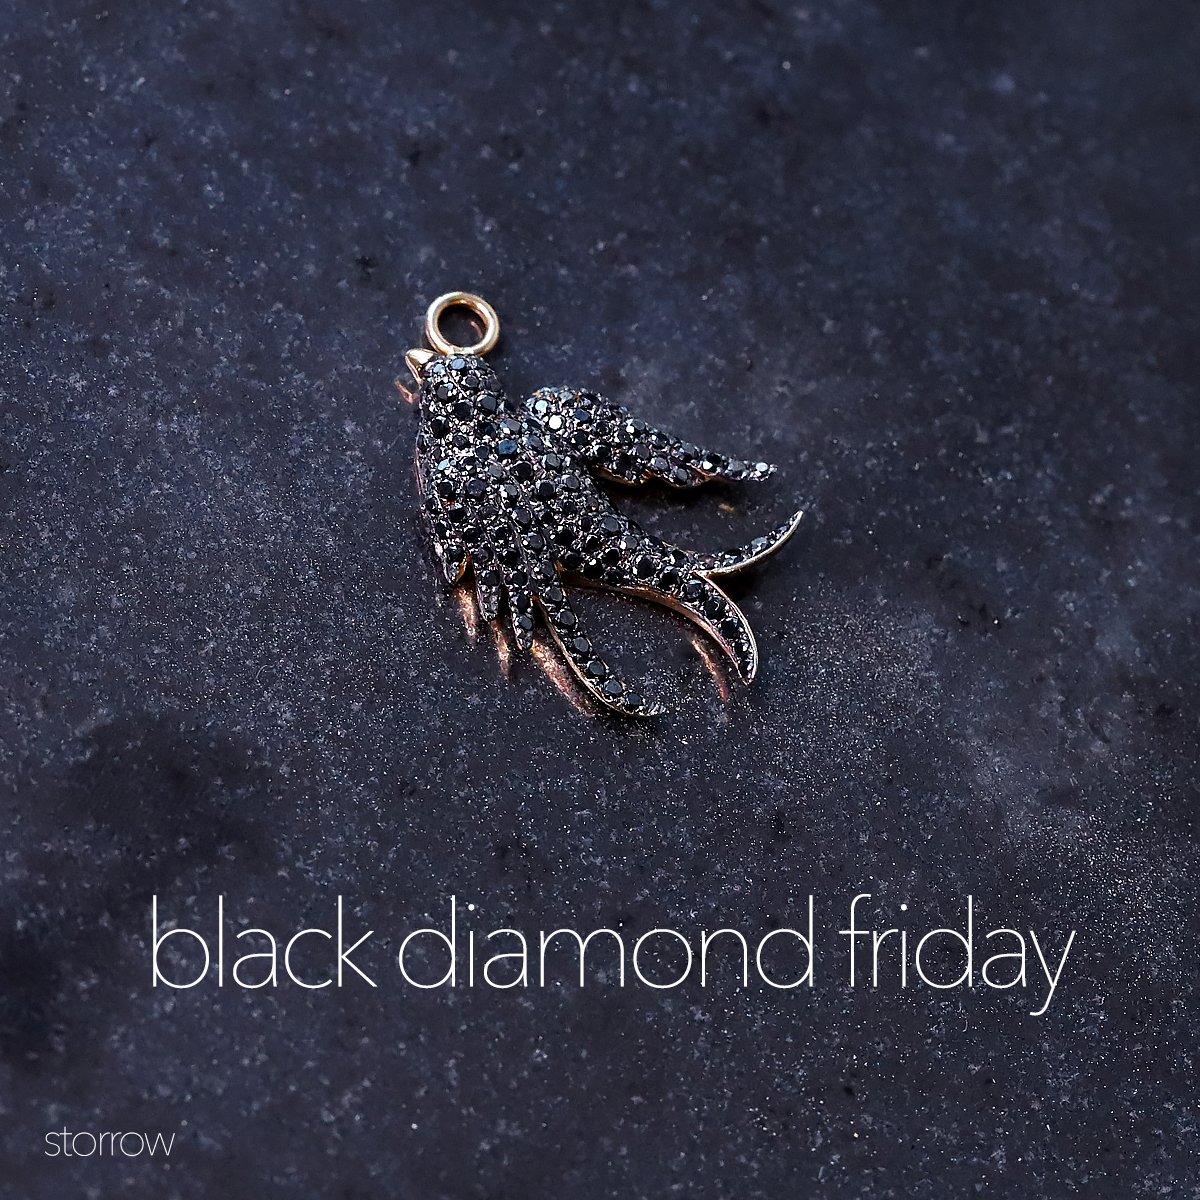 Black_Diamond_Friday_1200x1200_Header.jpg